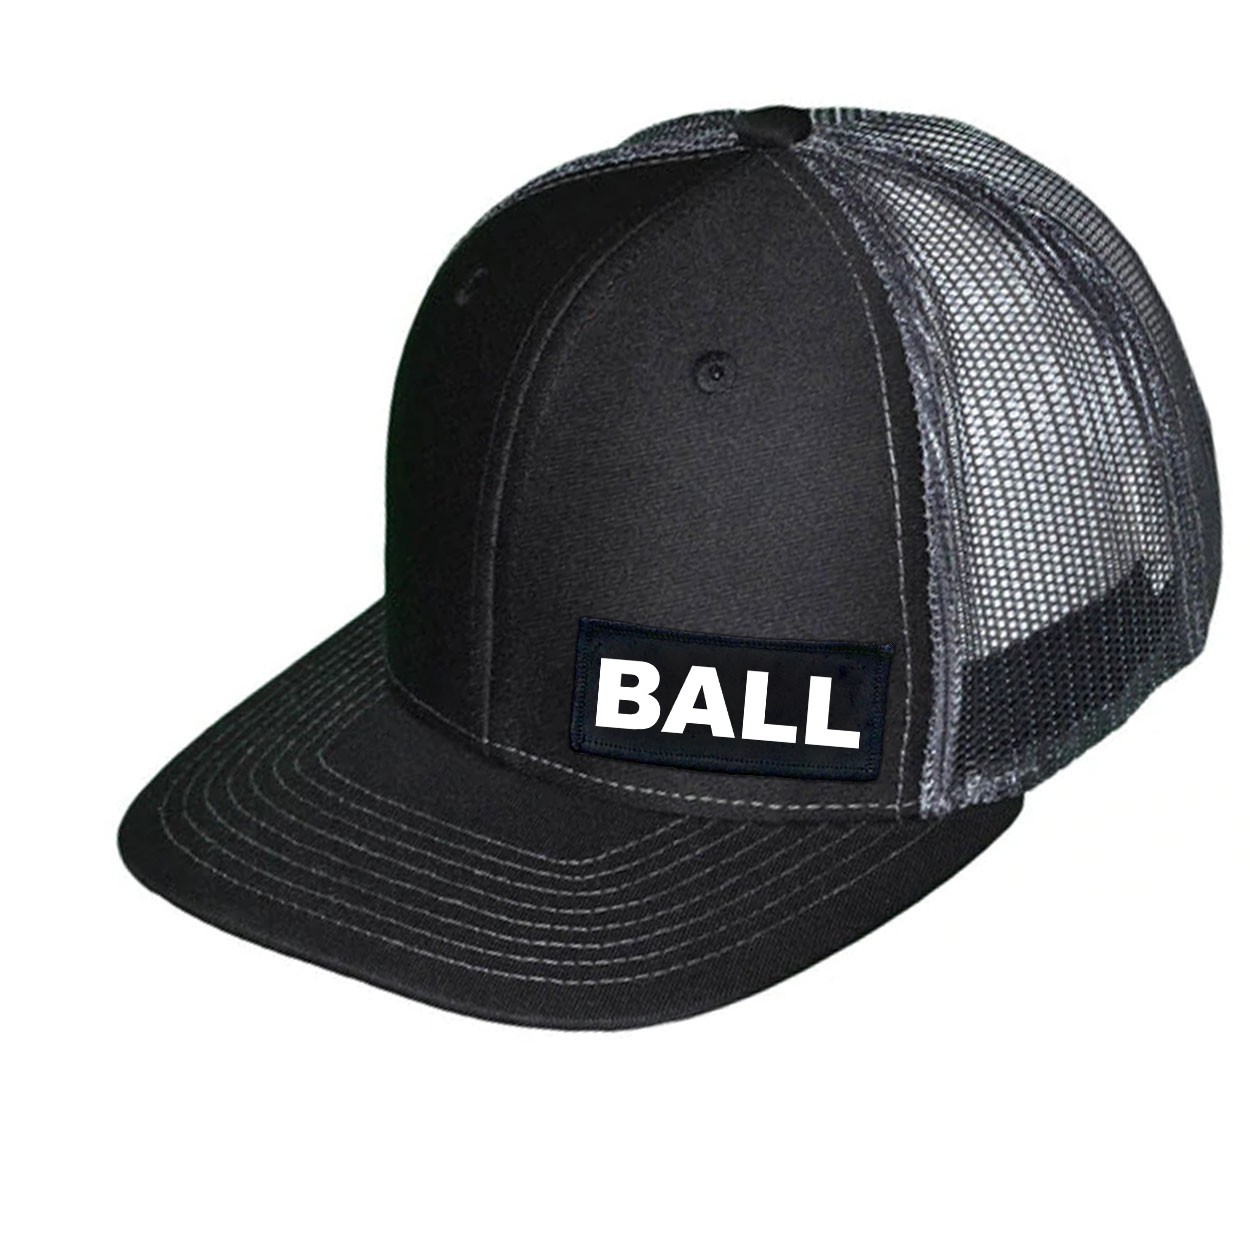 Ball Brand Logo Night Out Woven Patch Snapback Trucker Hat Black/Gray (White Logo)